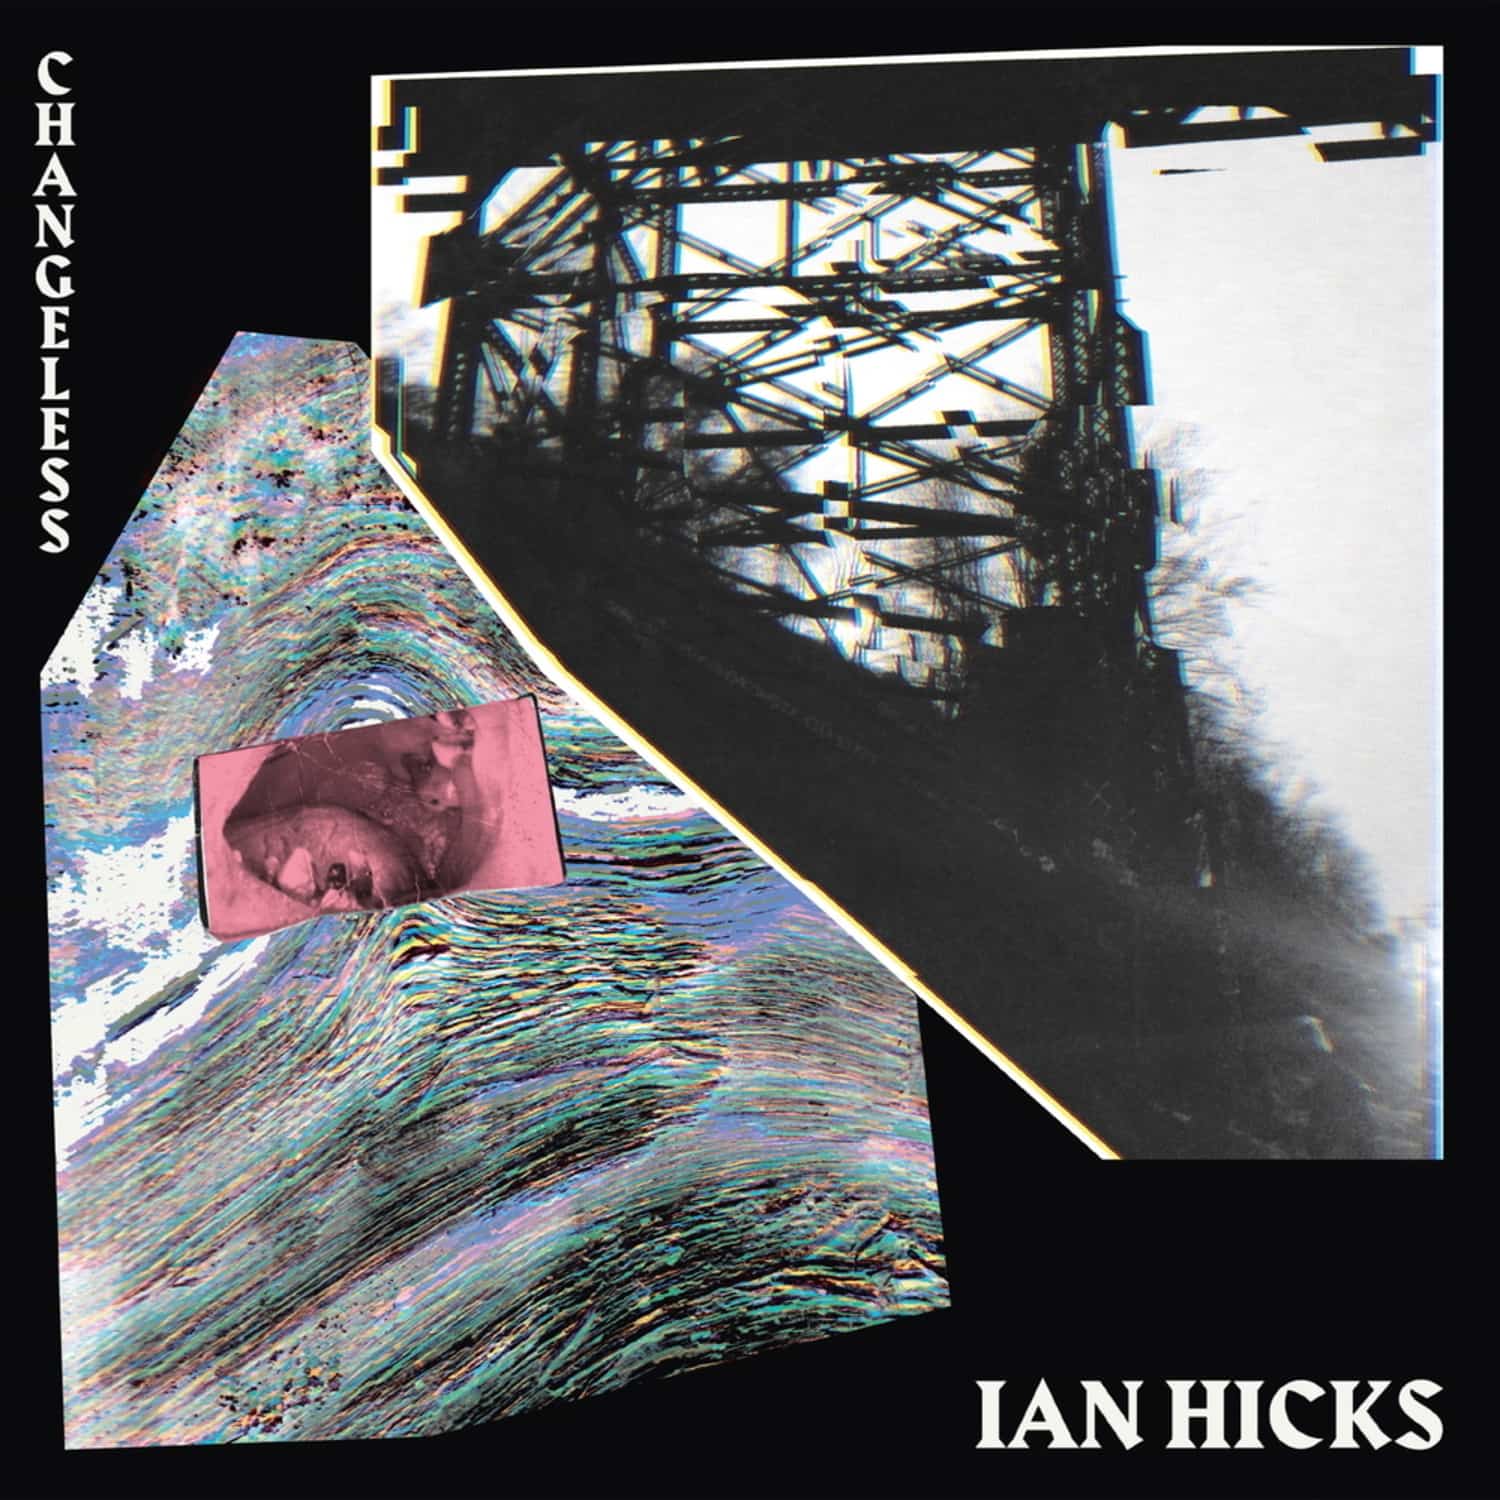 Ian Hicks - CHARACTER COLLAPSE